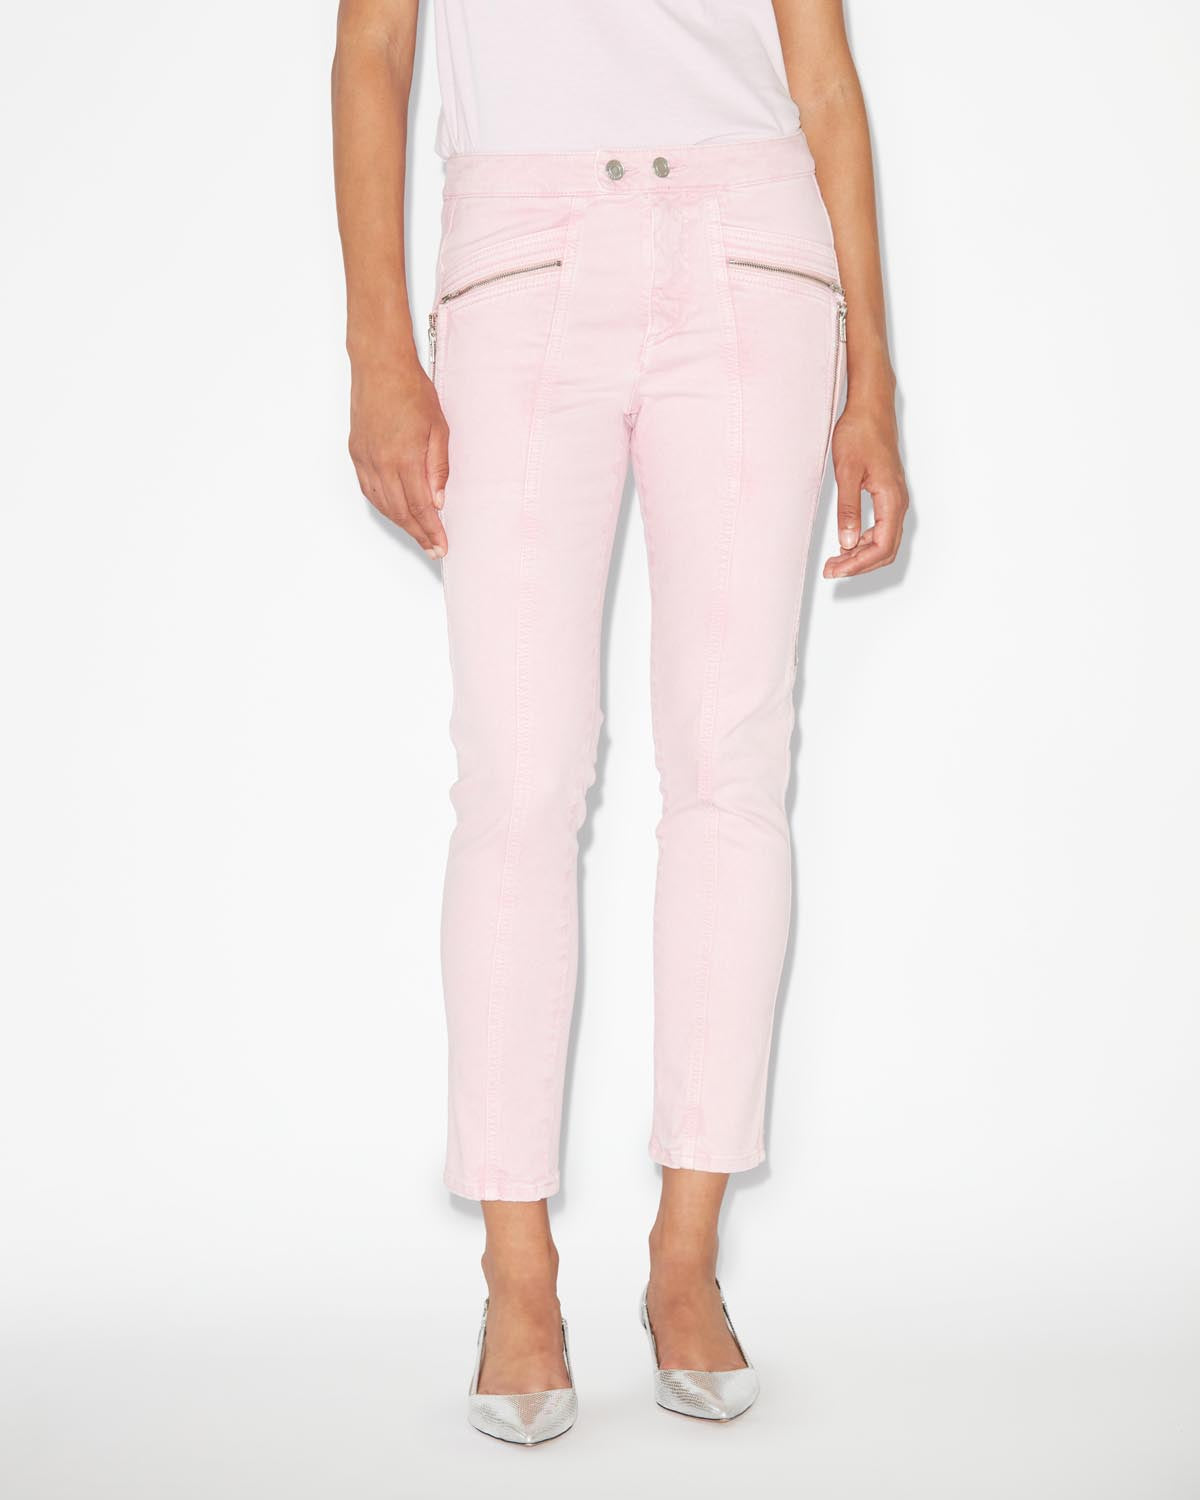 Pantalones prezi Woman Light pink 4